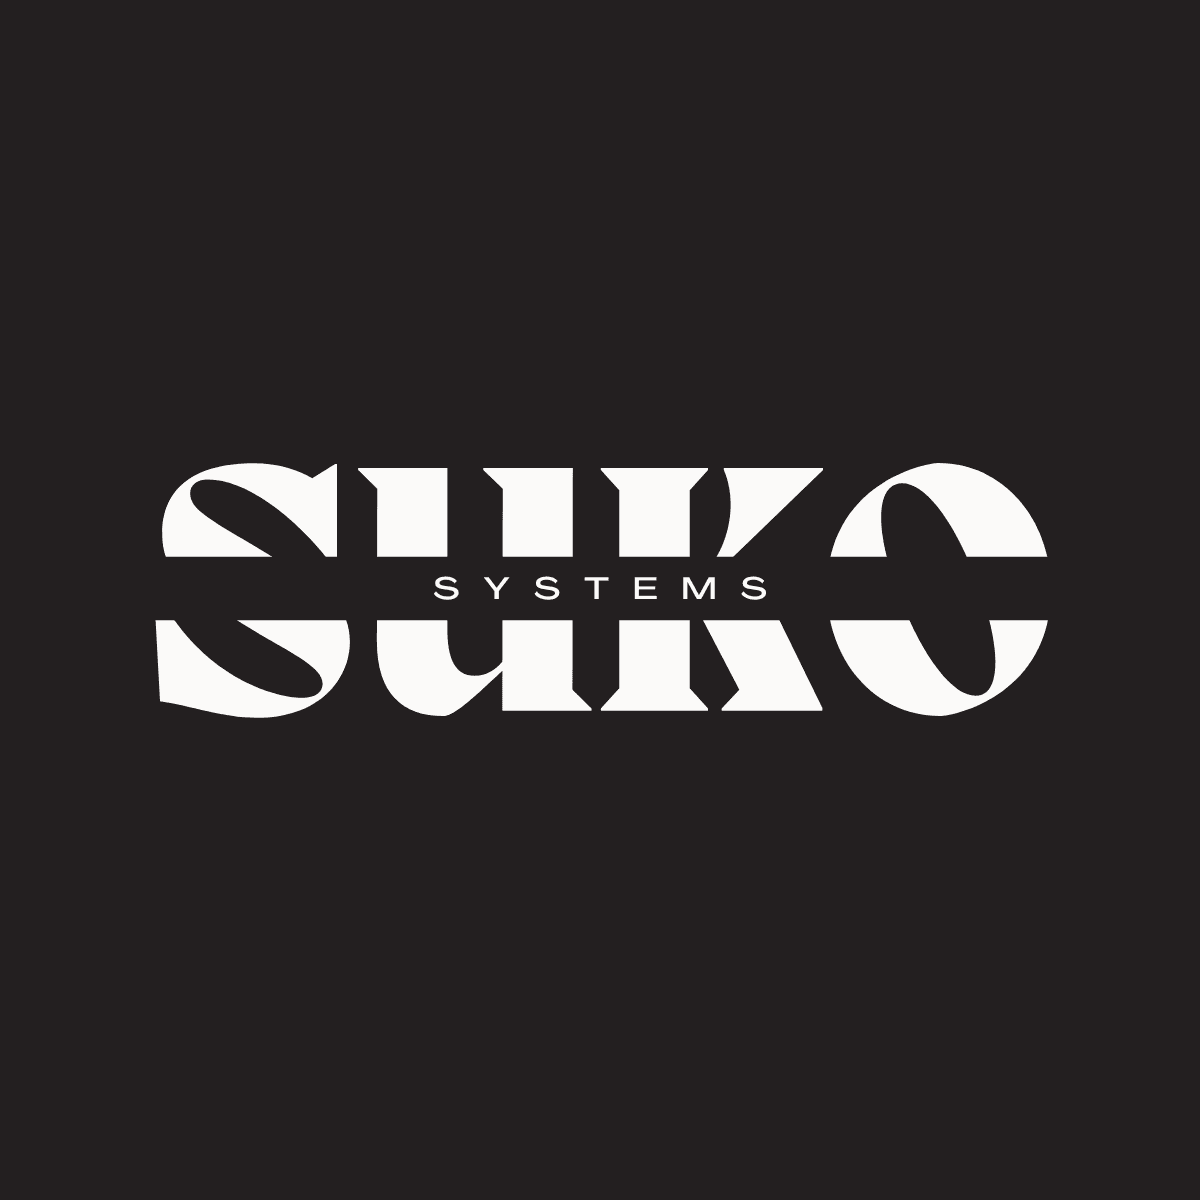 Suko Systems: The Reboot